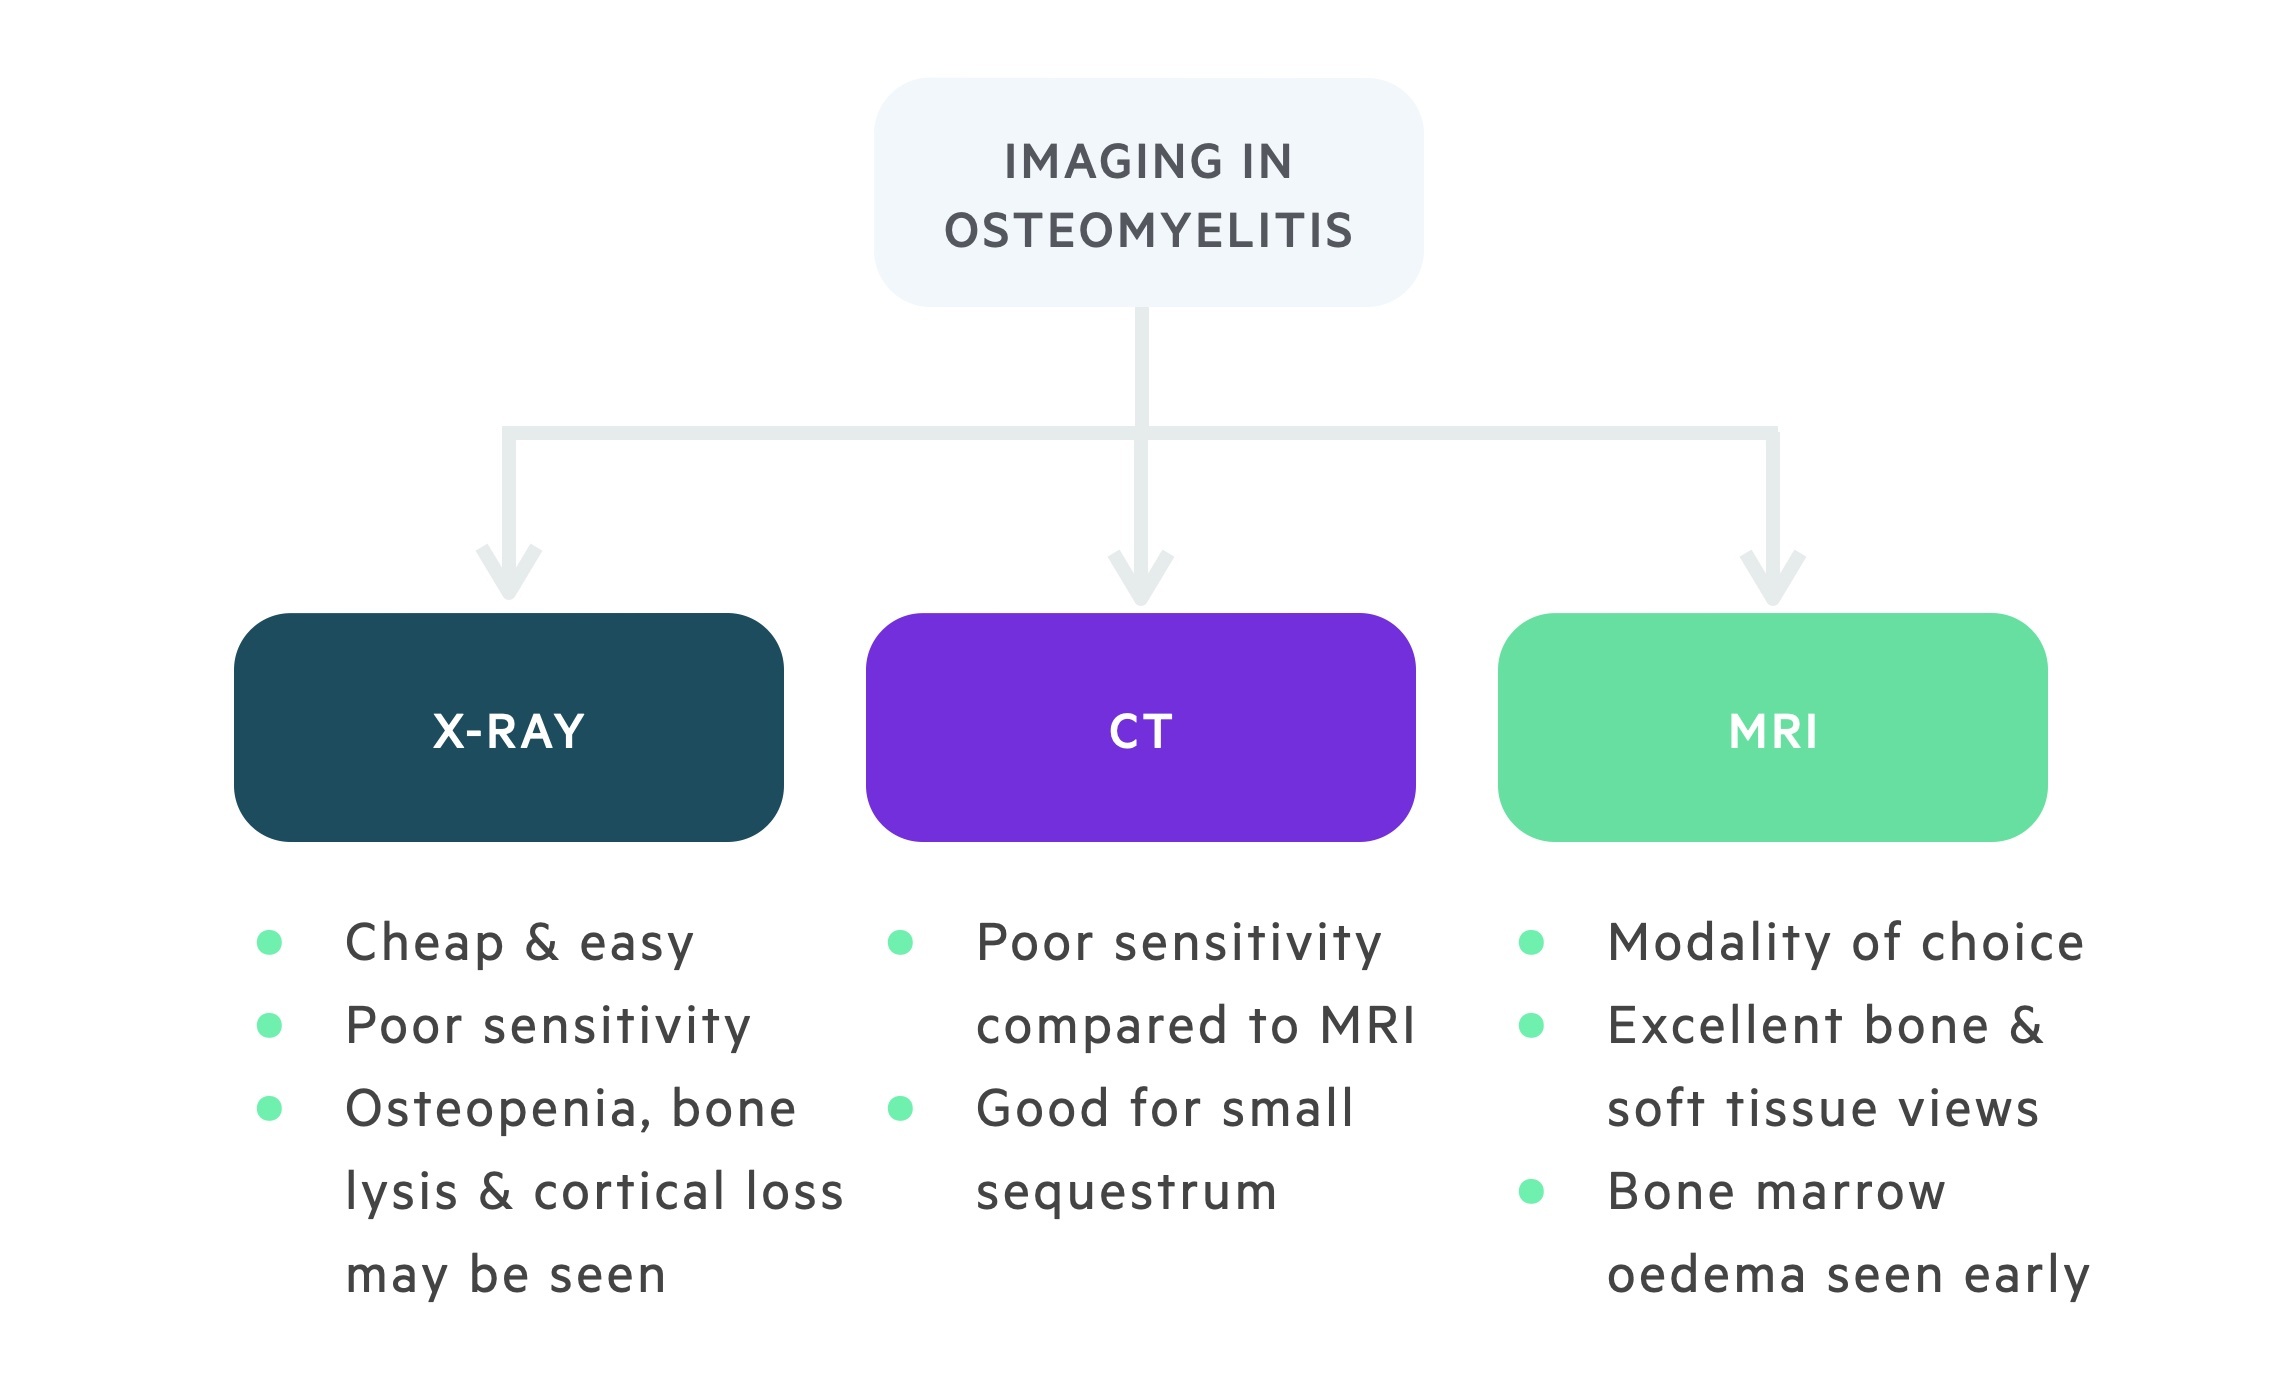 Imaging in osteomyelitis